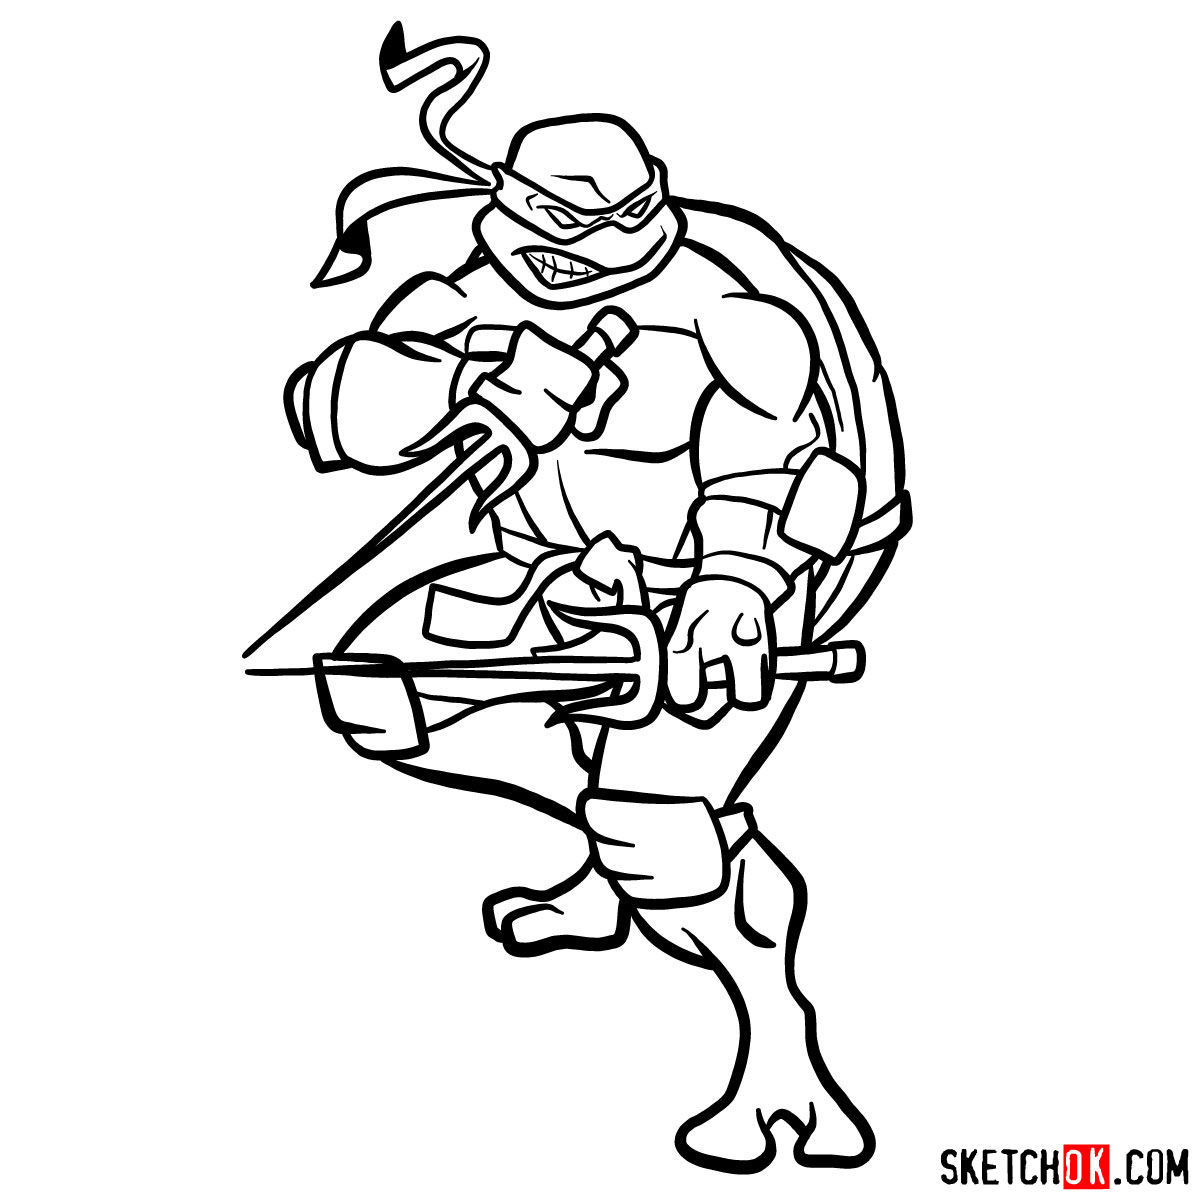 How to draw angry Raphael teenage mutant ninja turtle